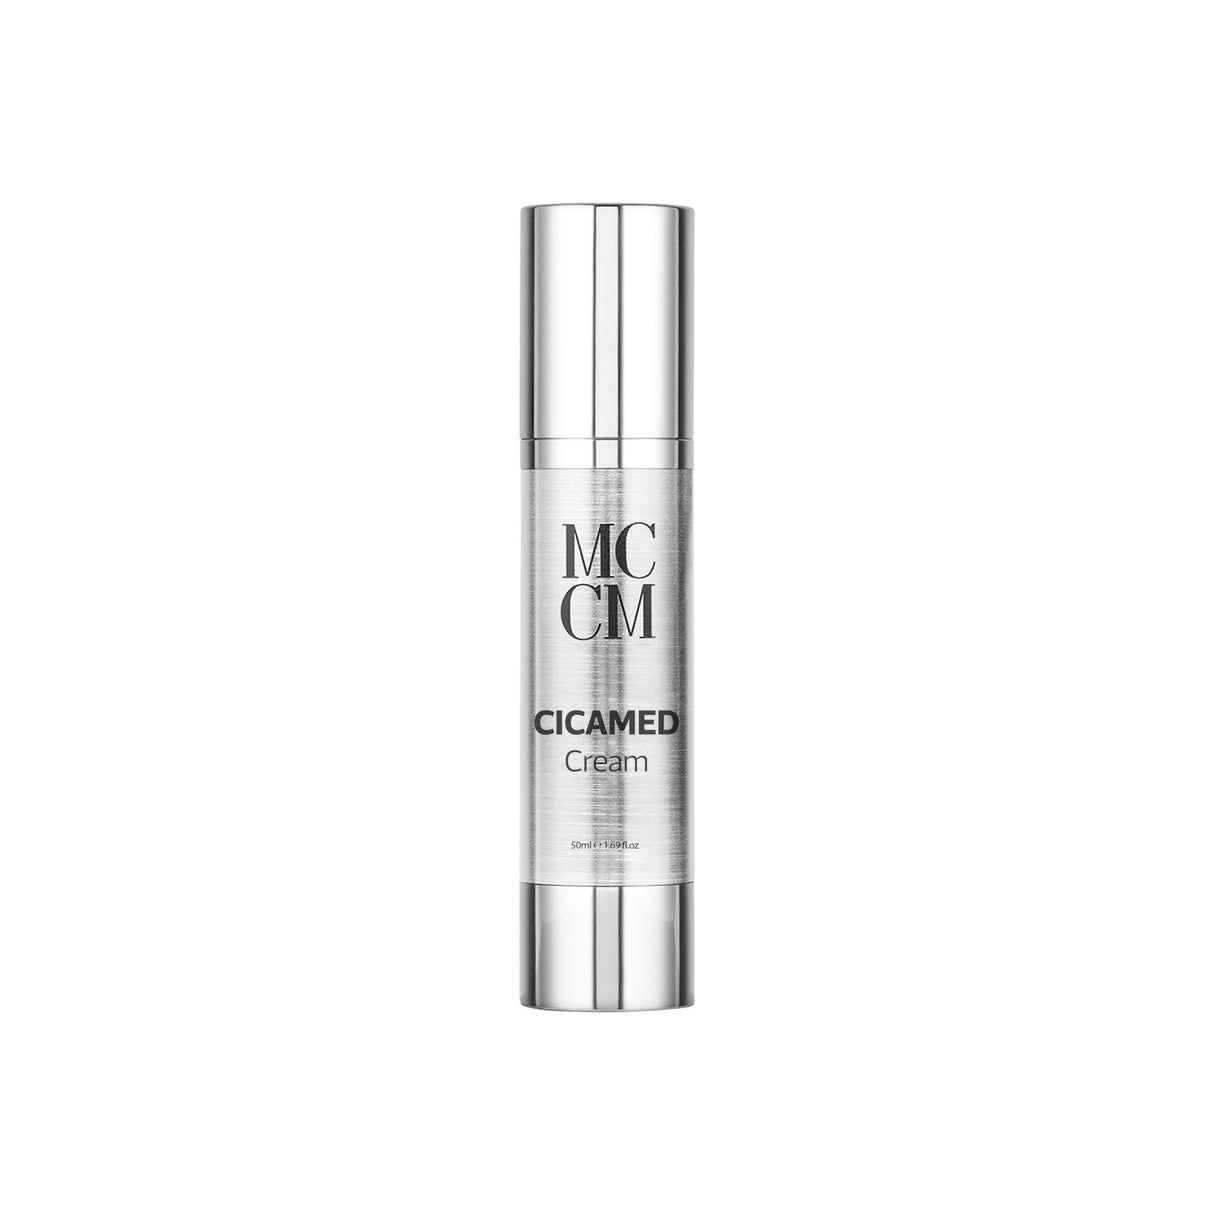 Cicamed Cream - Filler Lux™ - Balance - MCCM Medical Cosmetics